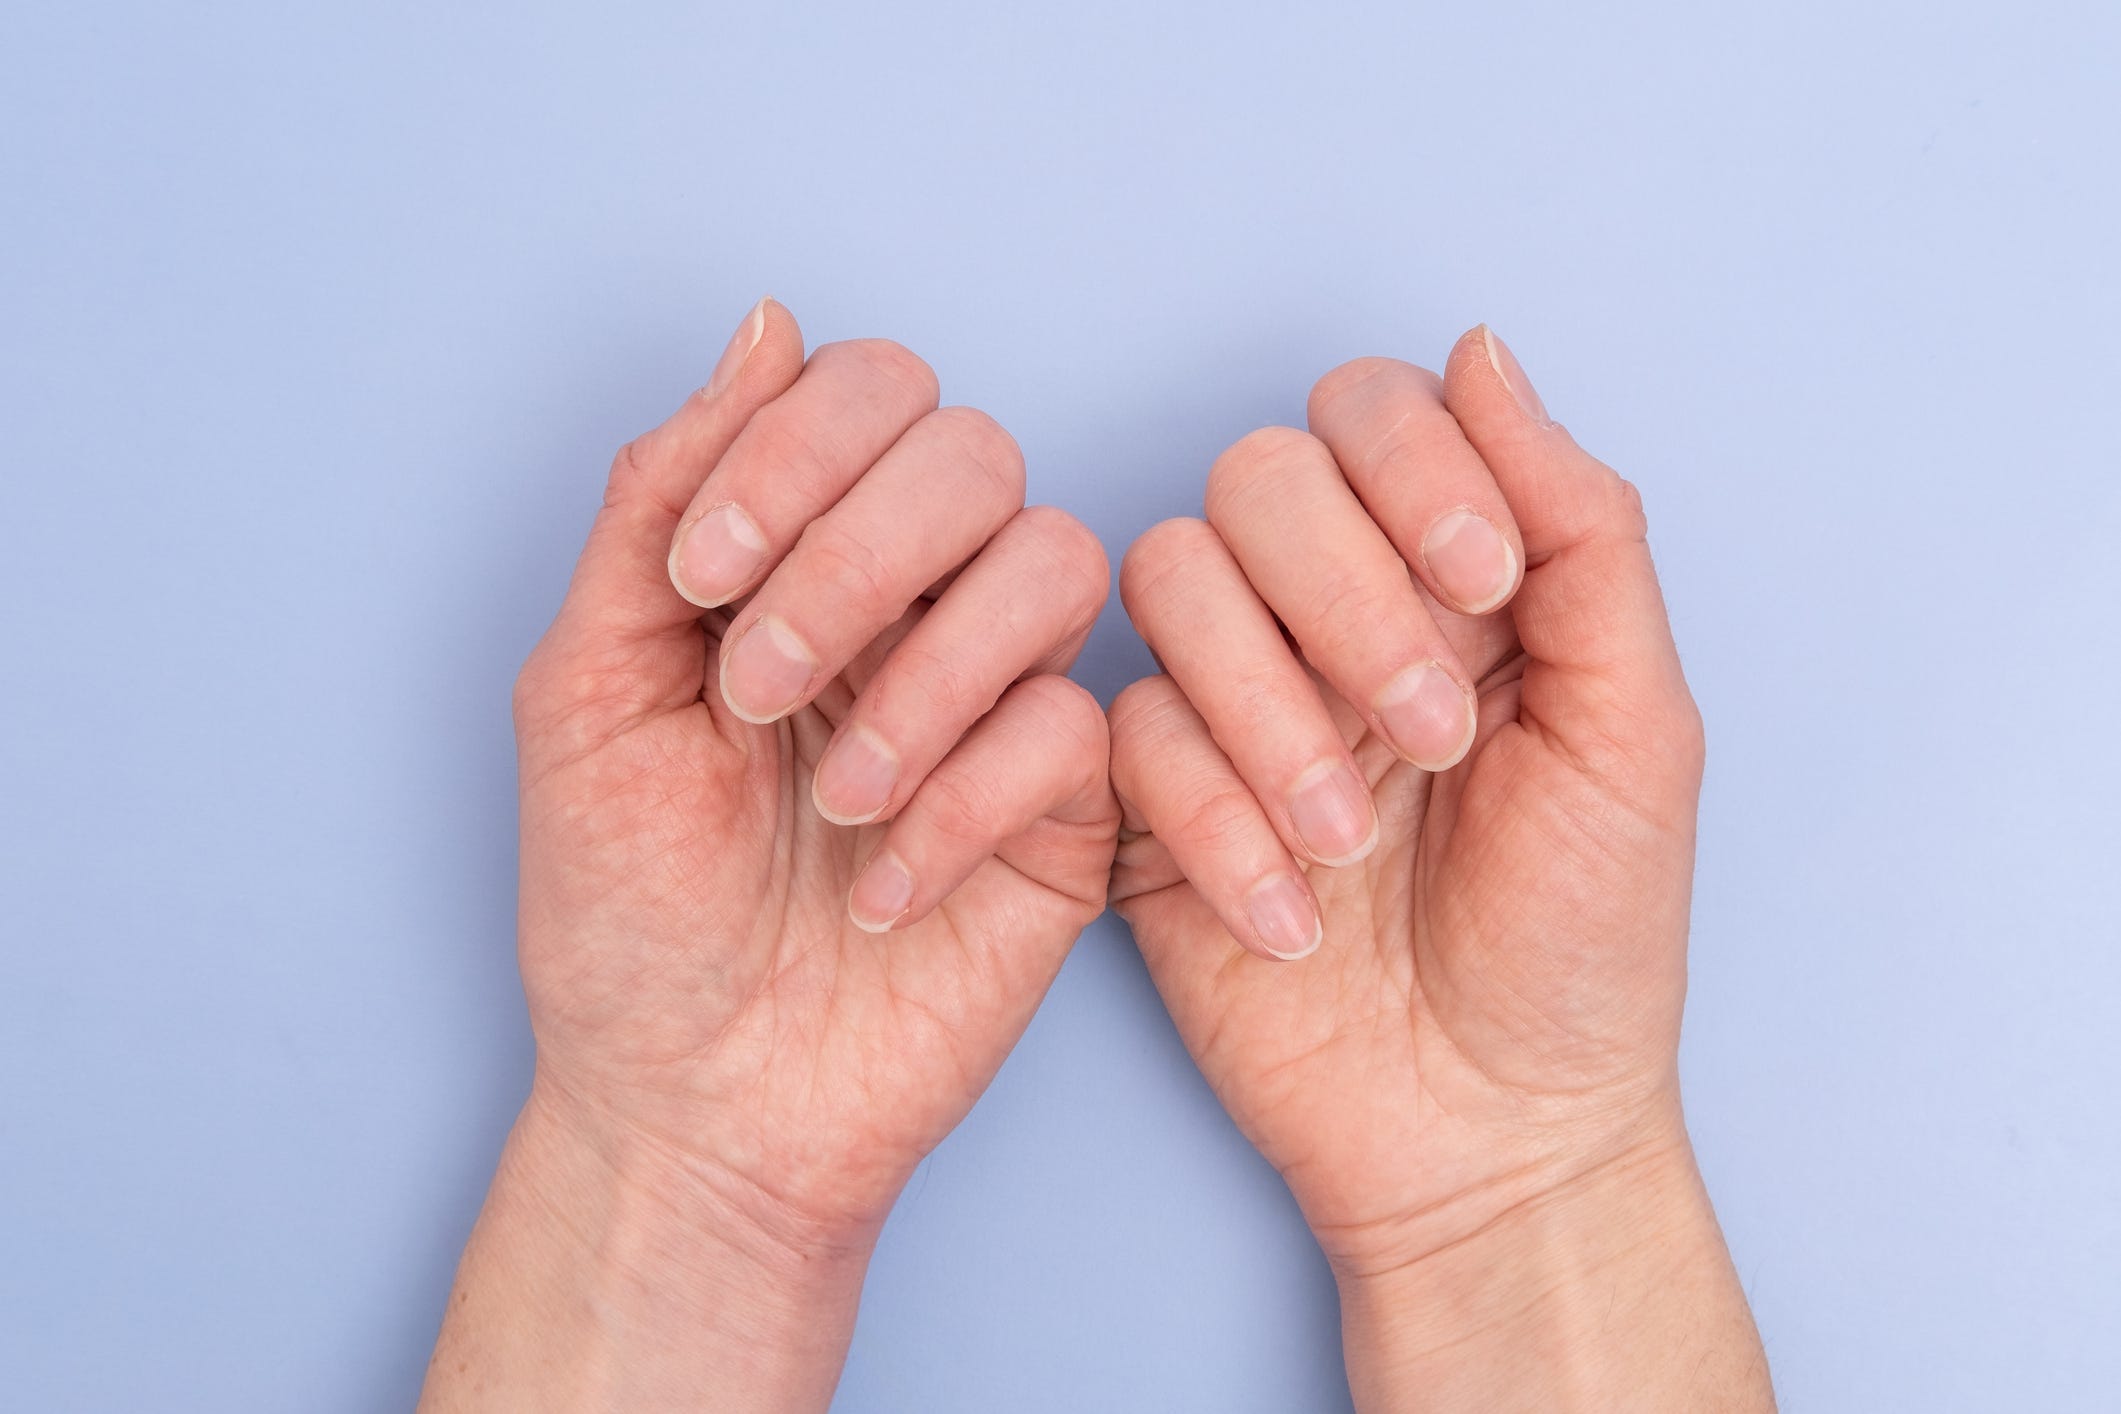 How fingernails might help doctors detect cancer risk [Video]